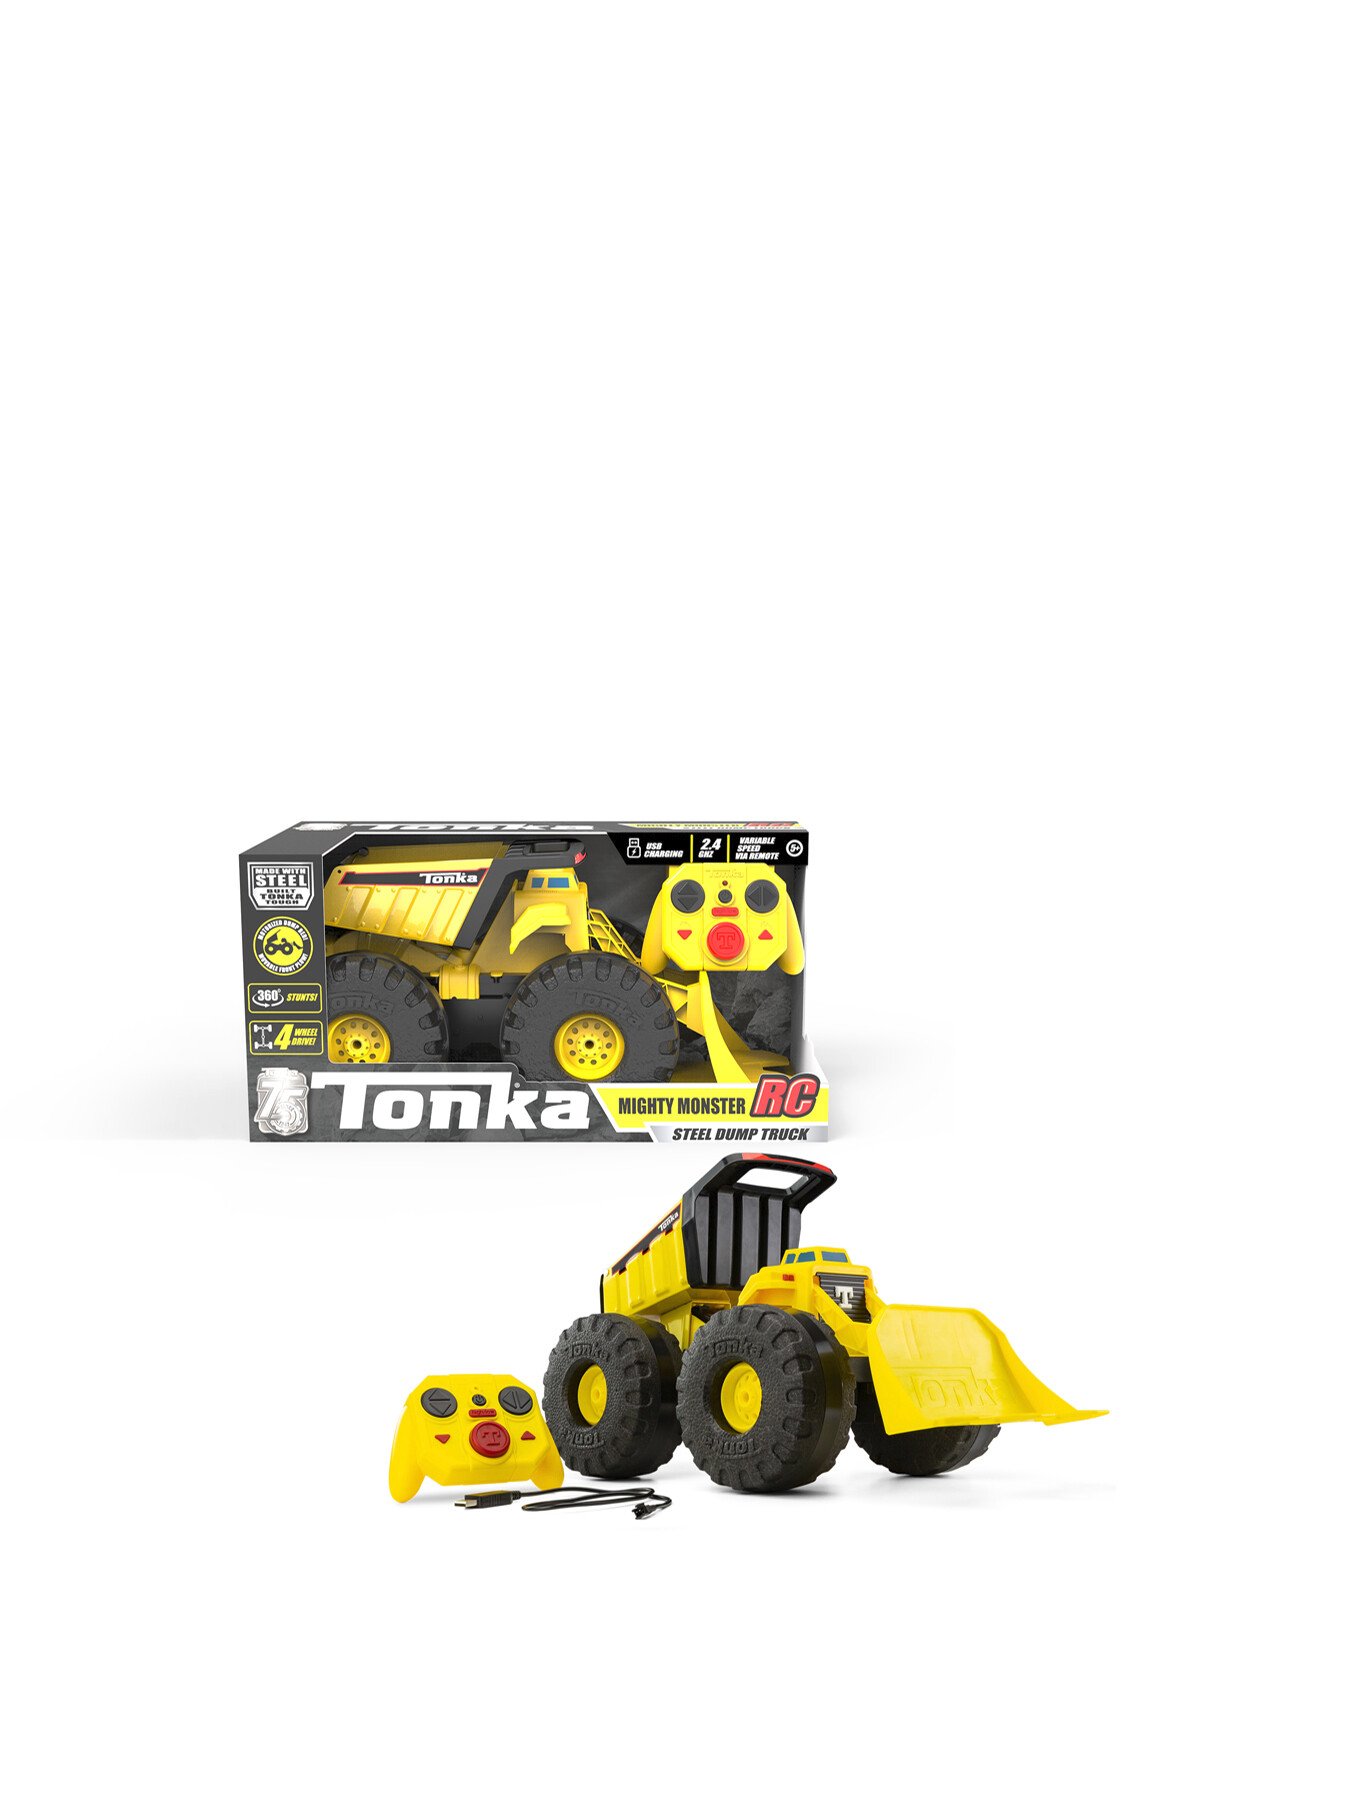 Tonka Mighty Monster RC Steel Dump Truck | LEGO & Construction Toys |  Fenwick